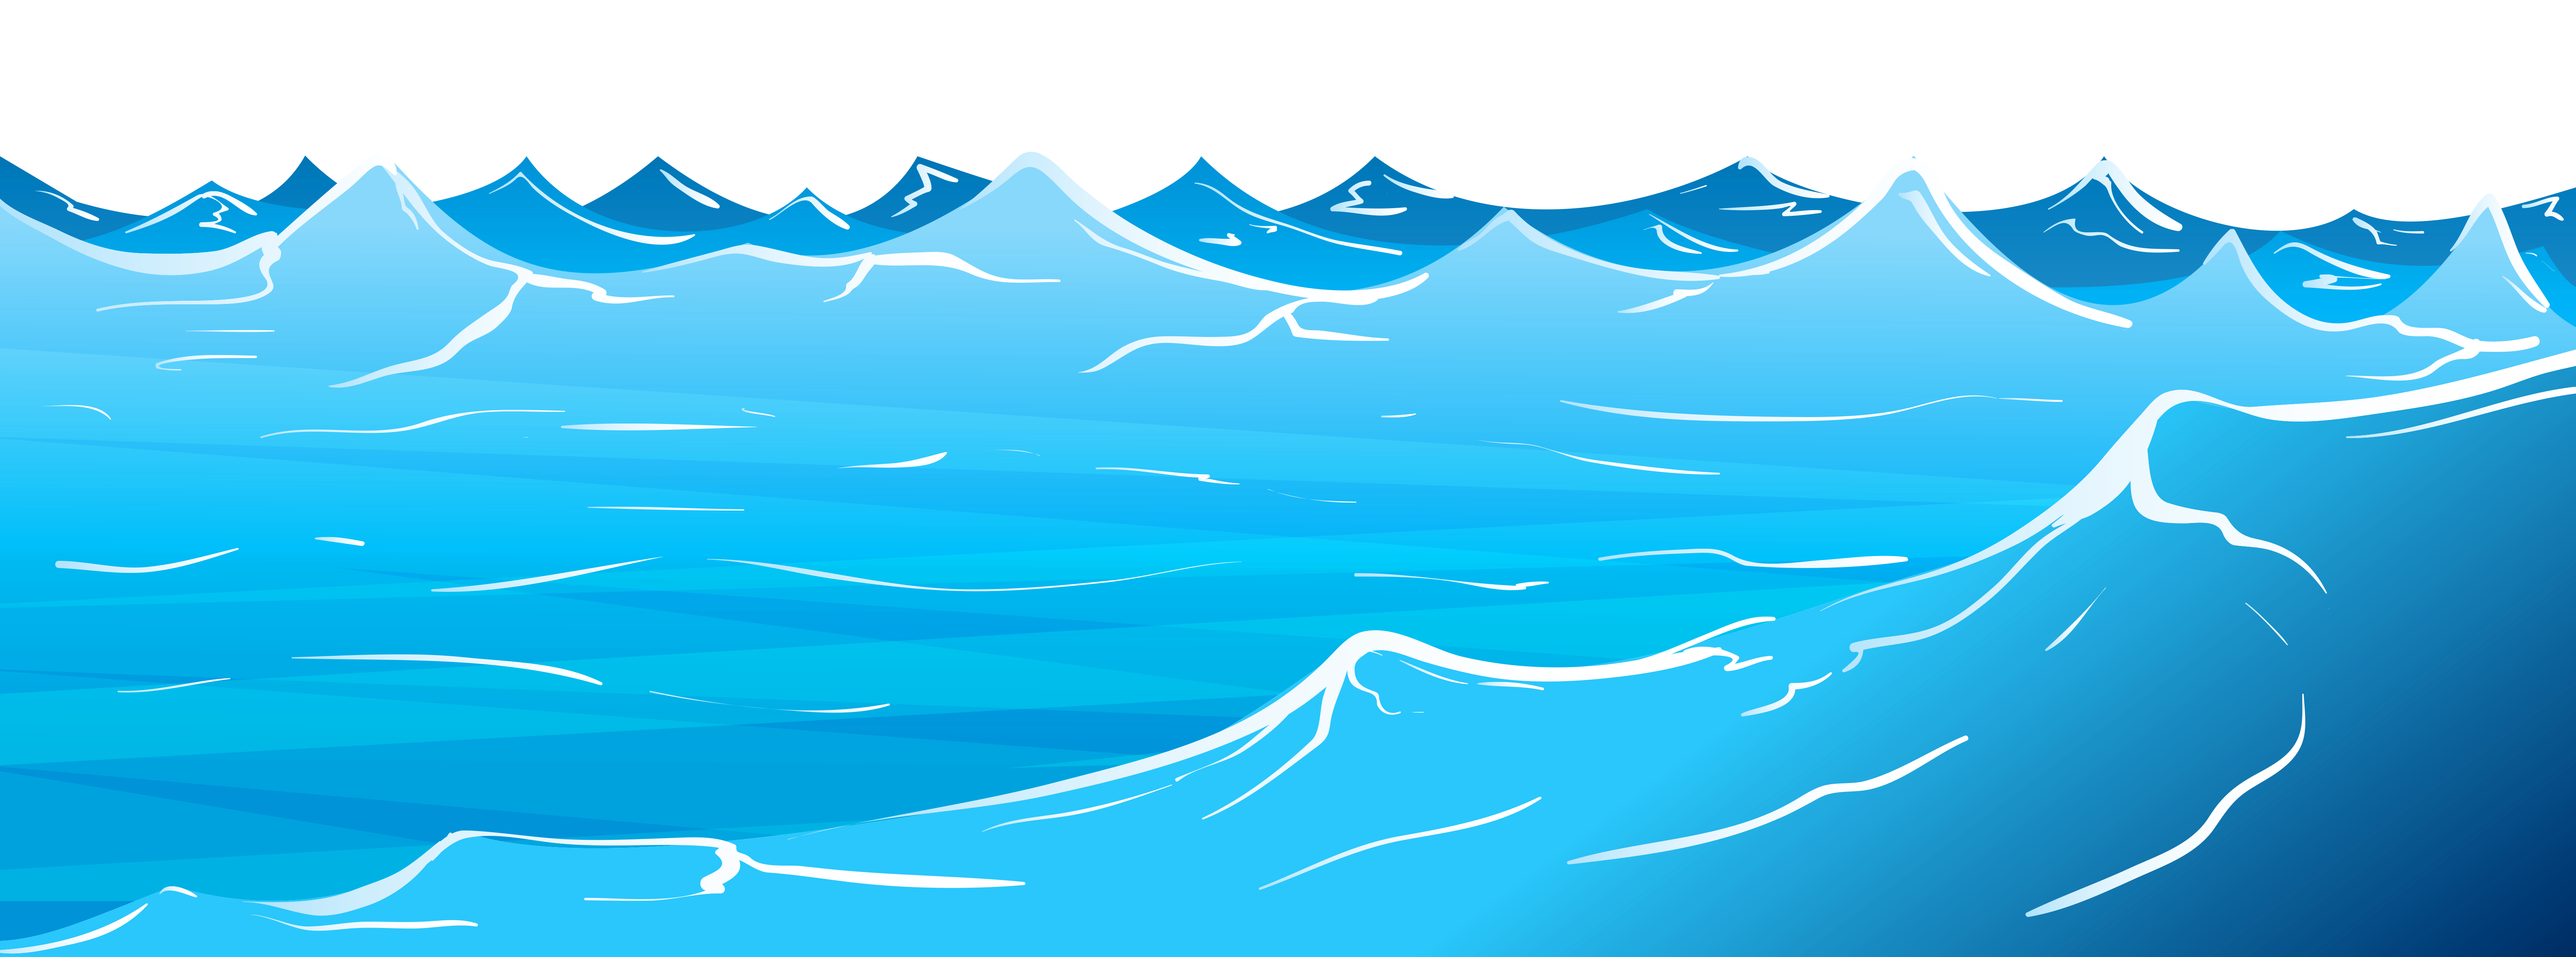 Waves ocean wave clip art vec